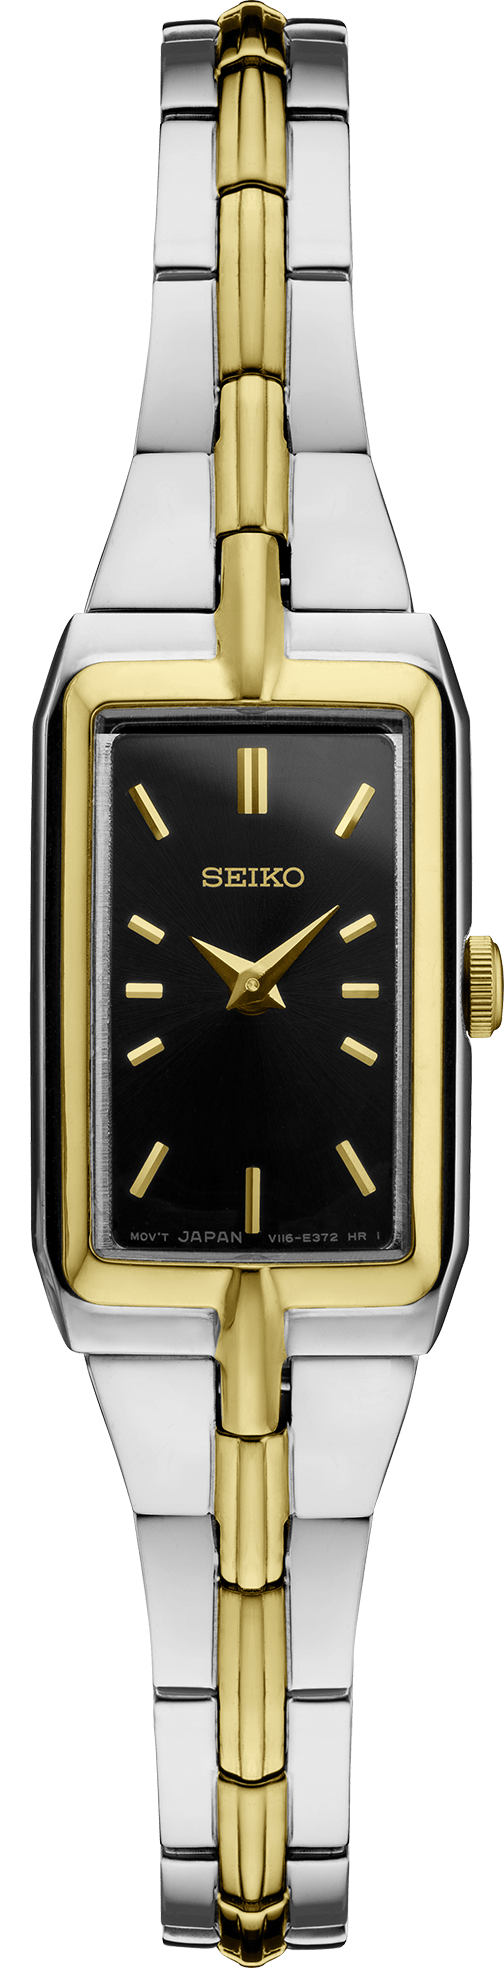 Lds Seiko Swr046 Tt Black Dial Watch